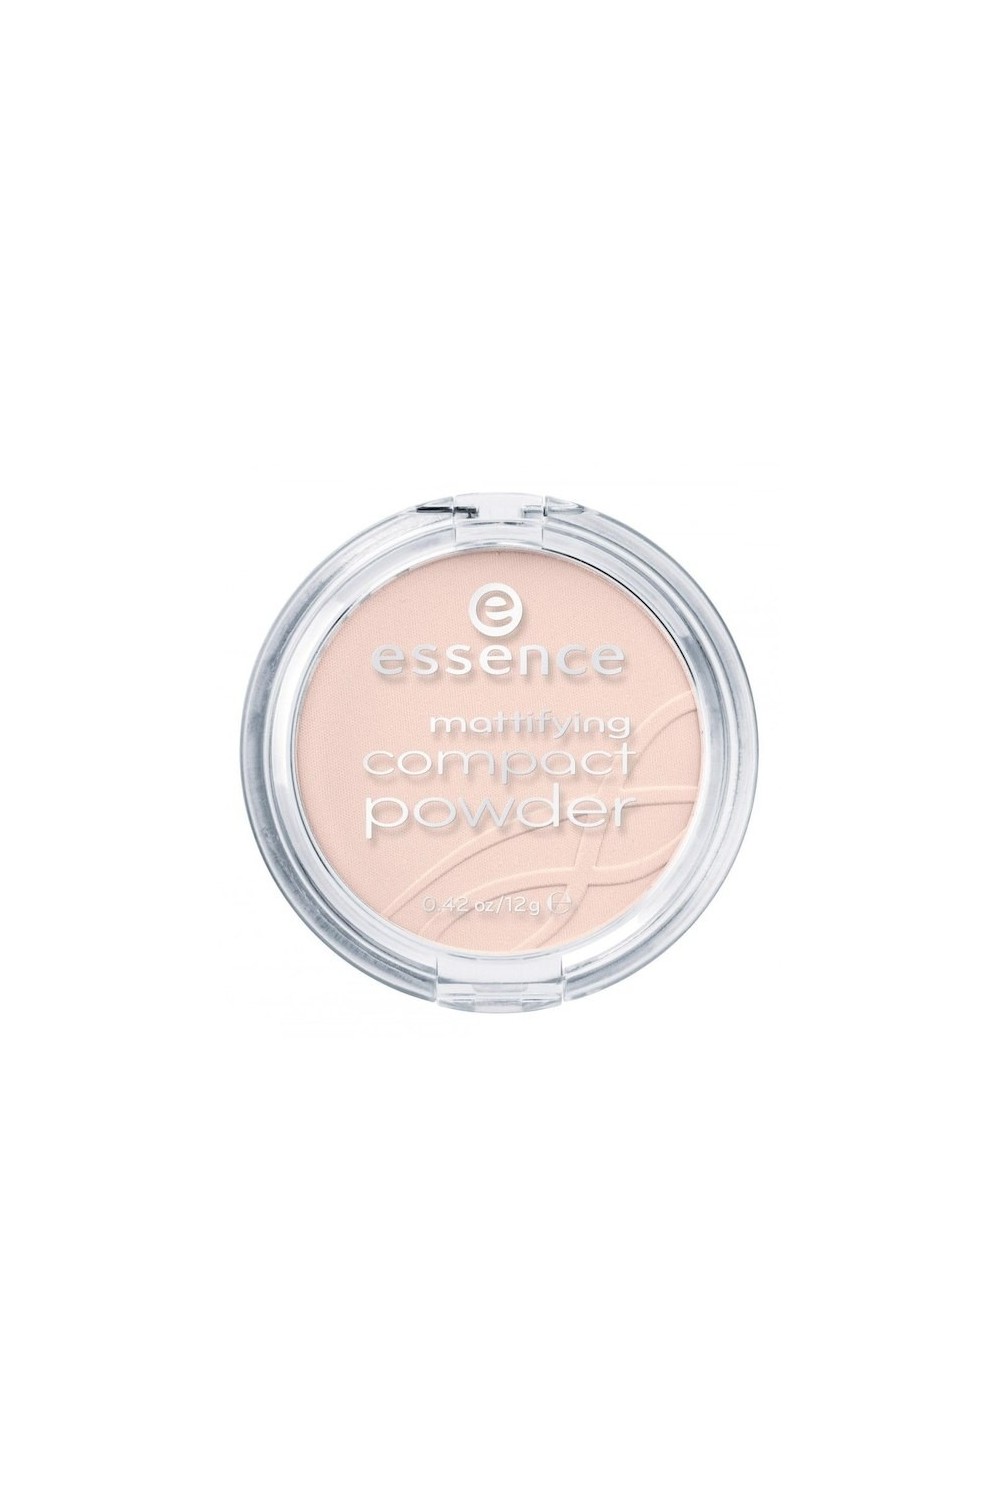 Essence Cosmetics Compact Powder Matificantes 10-Light Beige 12g